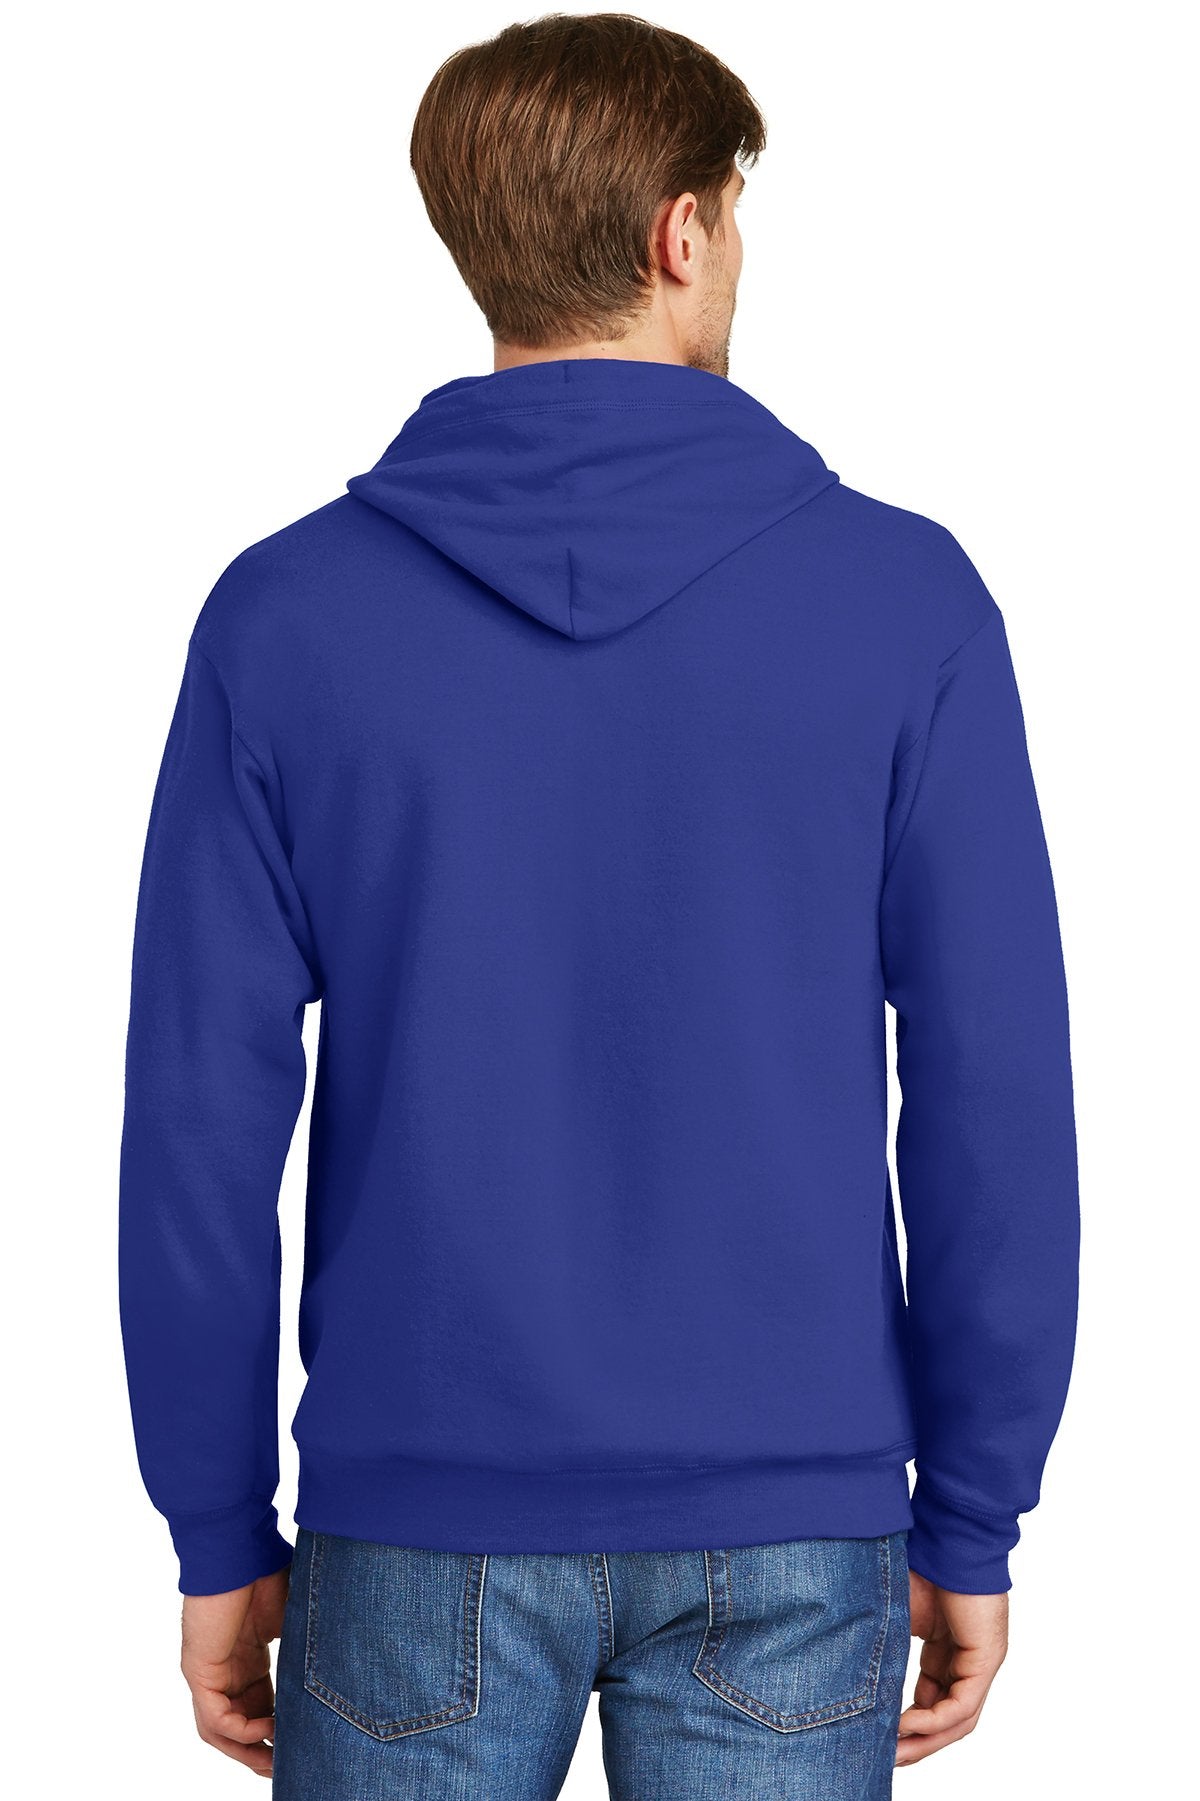 Hanes Ecosmart Full Zip Hooded Sweatshirt P180 Deep Royal